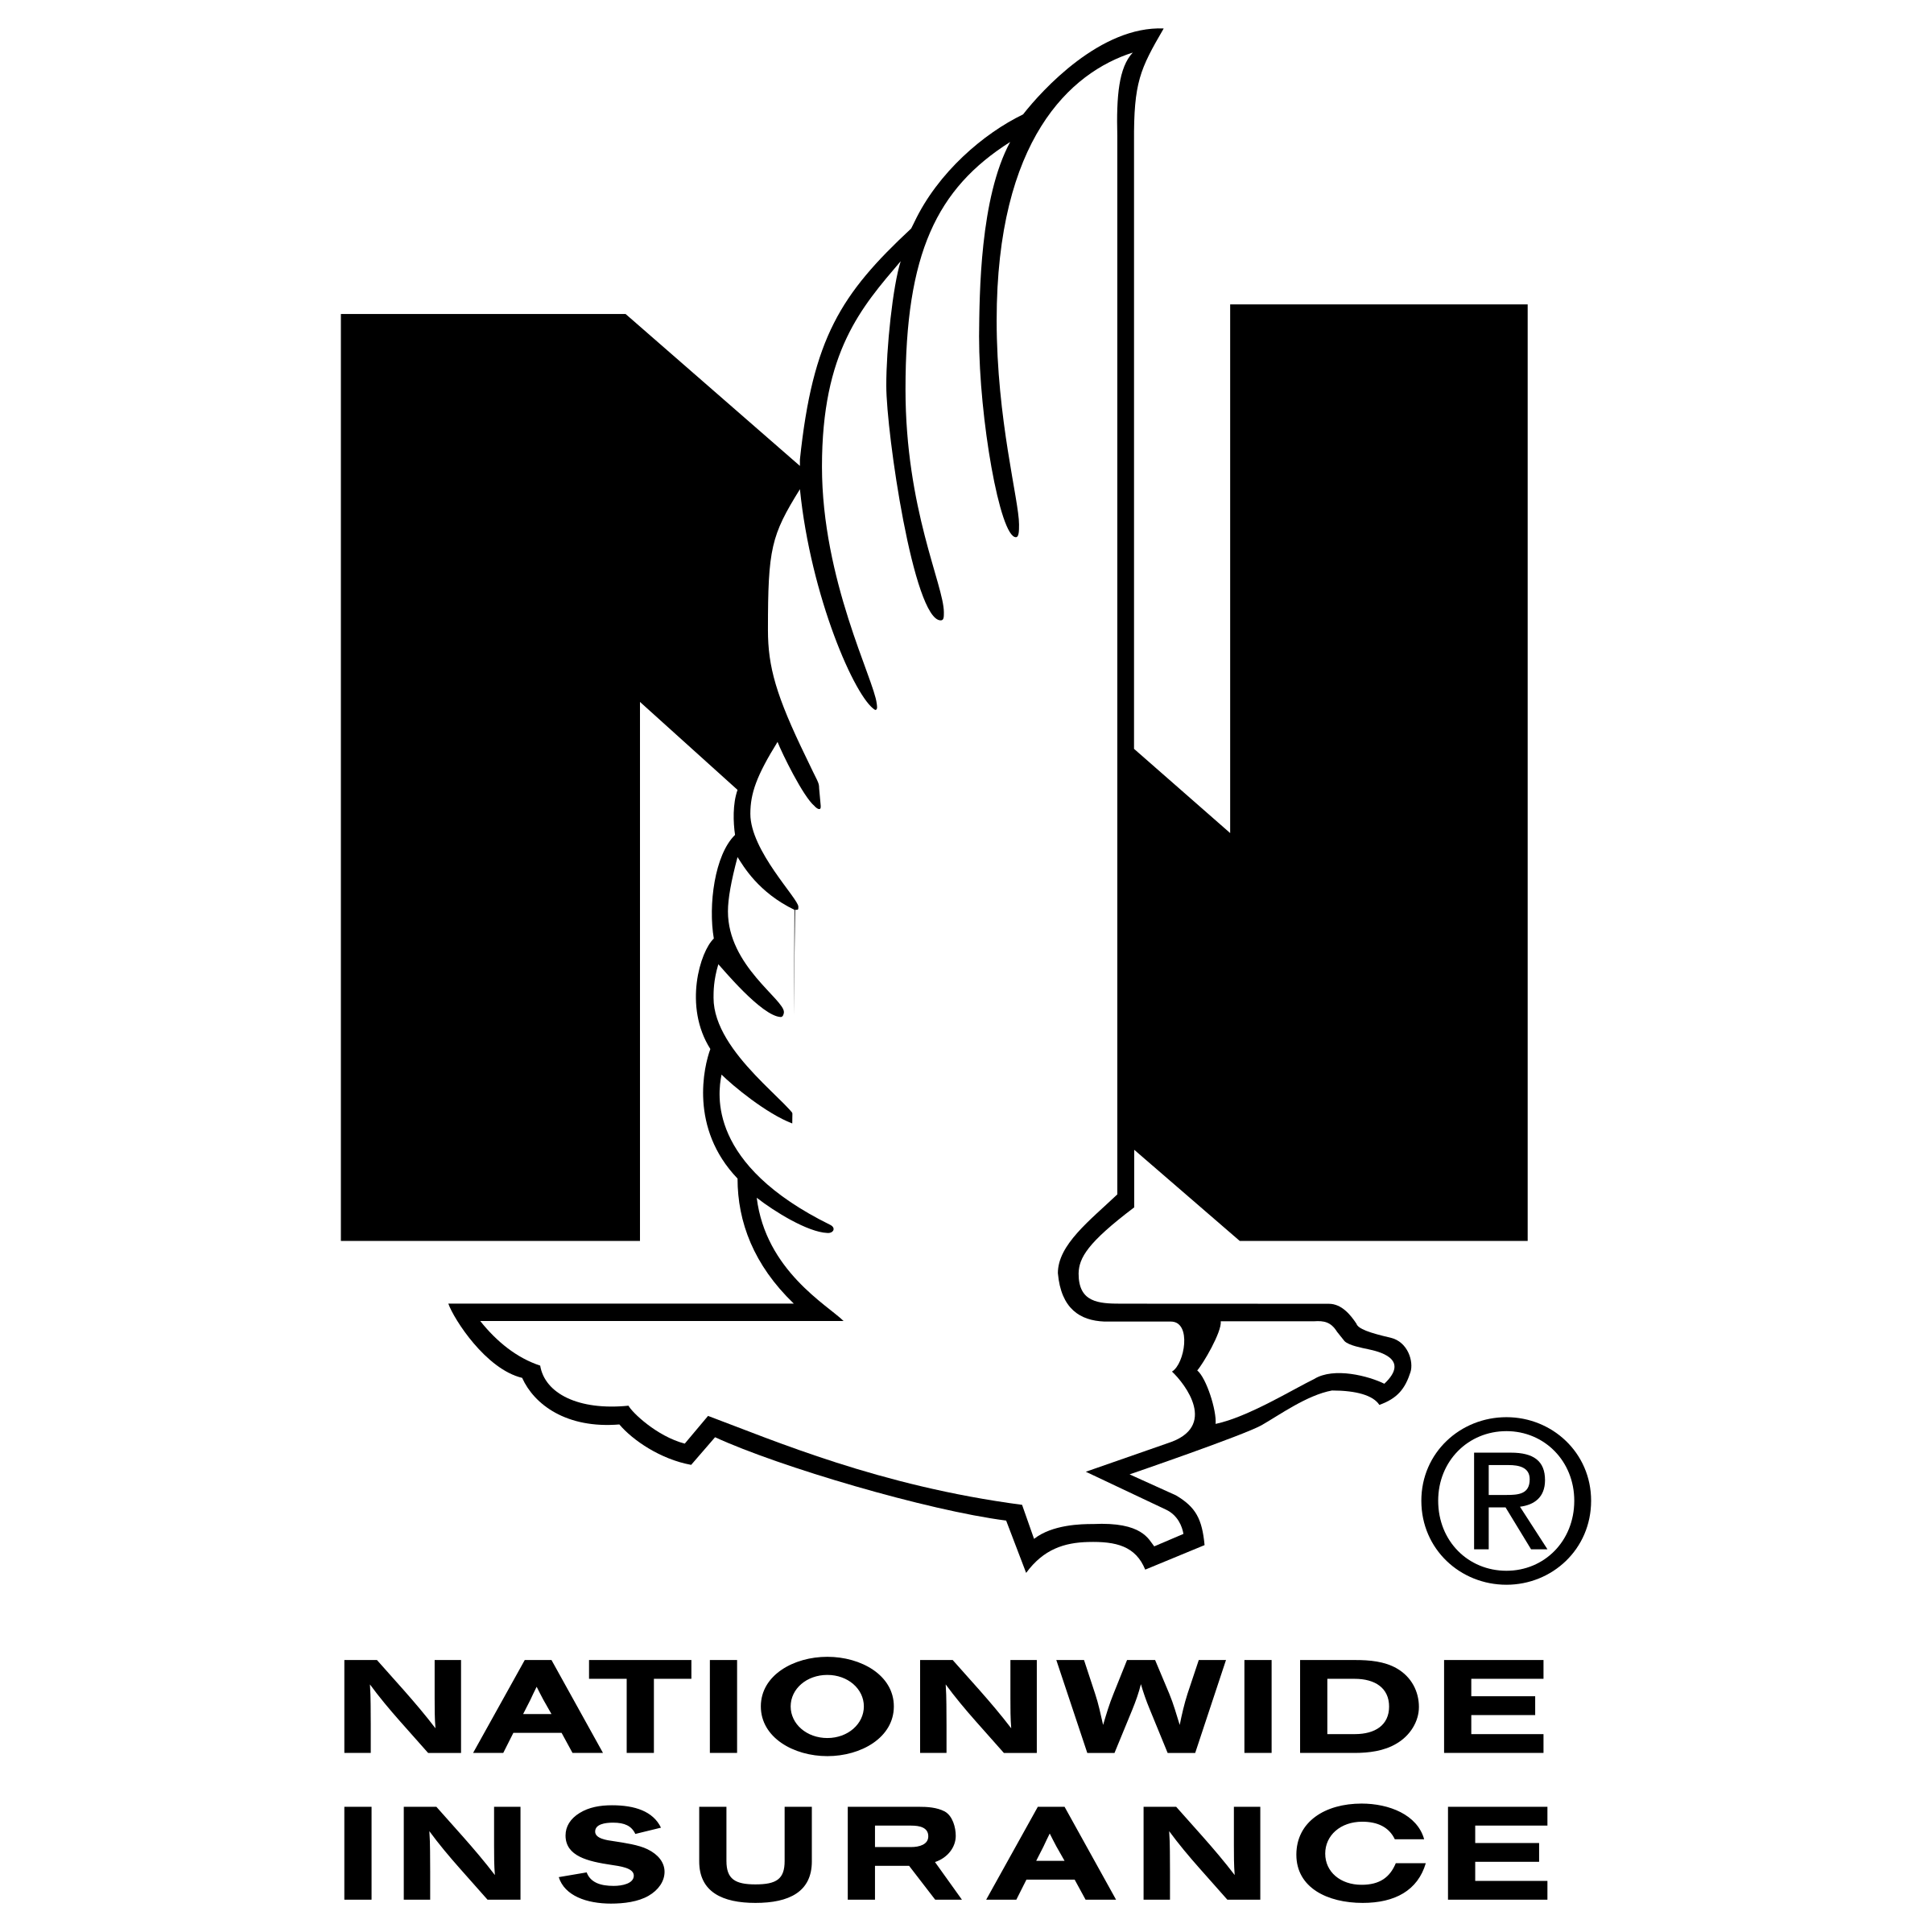 Nationwide Logo - Nationwide Insurance Logo PNG Transparent & SVG Vector - Freebie Supply